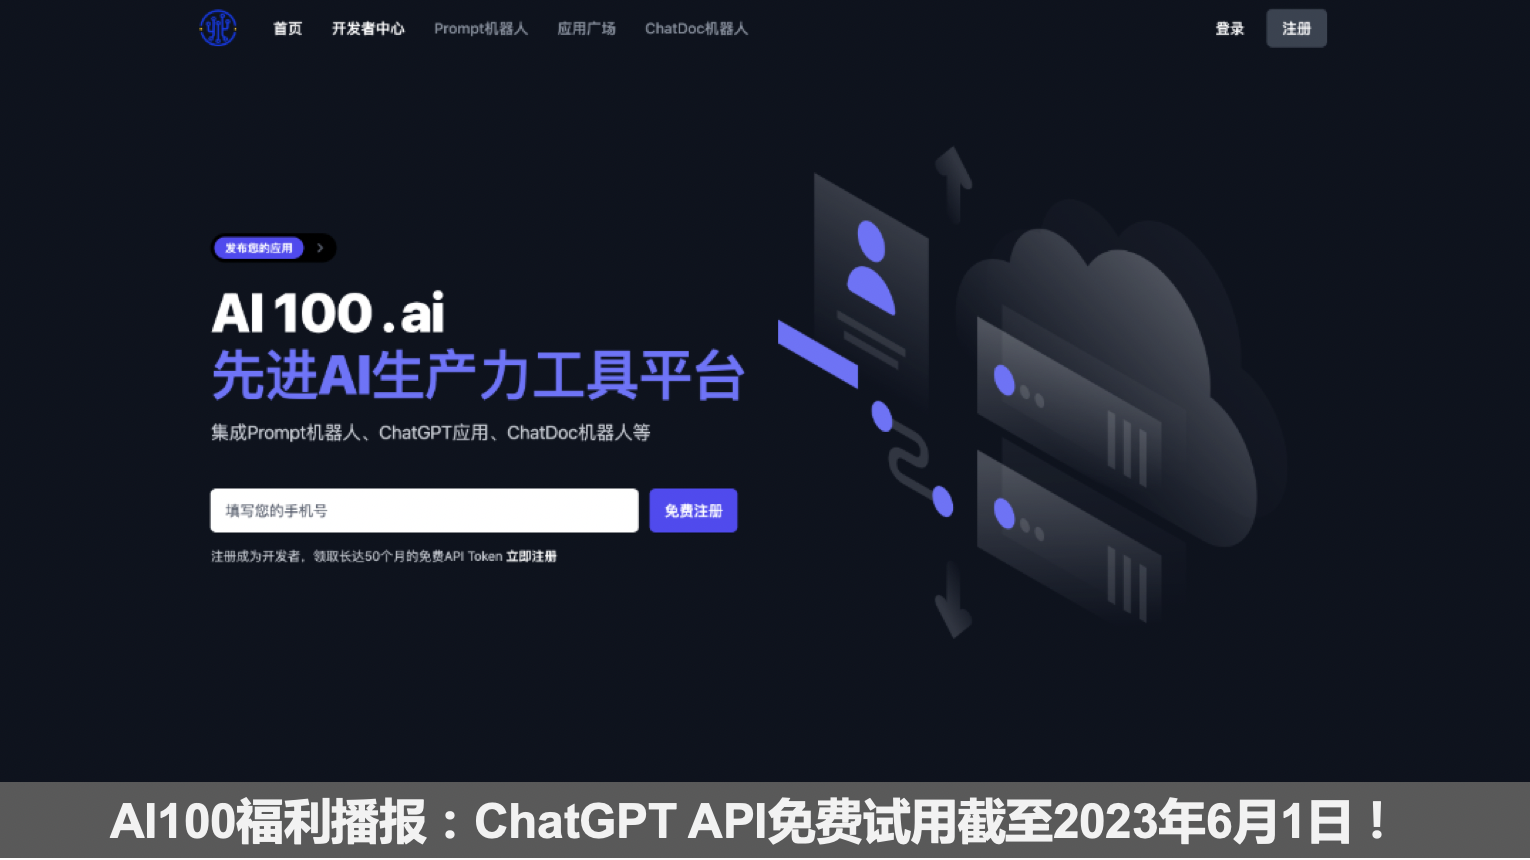 AI生产力工具平台AI100.ai今日正式上线，ChatGPT API和Prompt机器人免费试用